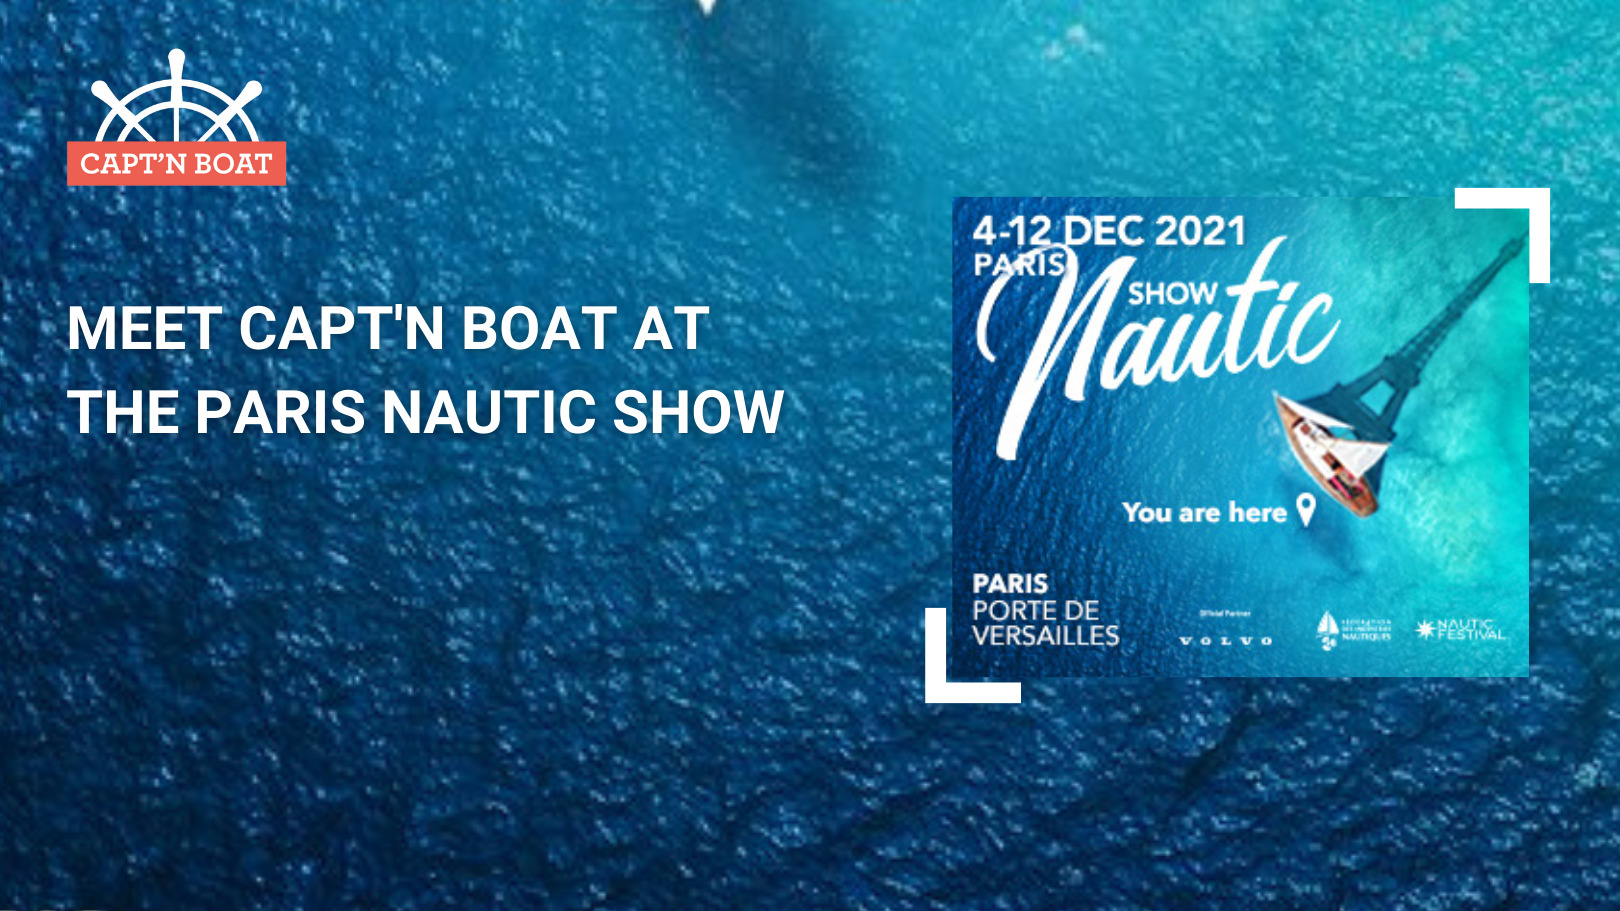 Meet Capt'n Boat at the Paris Nautic show